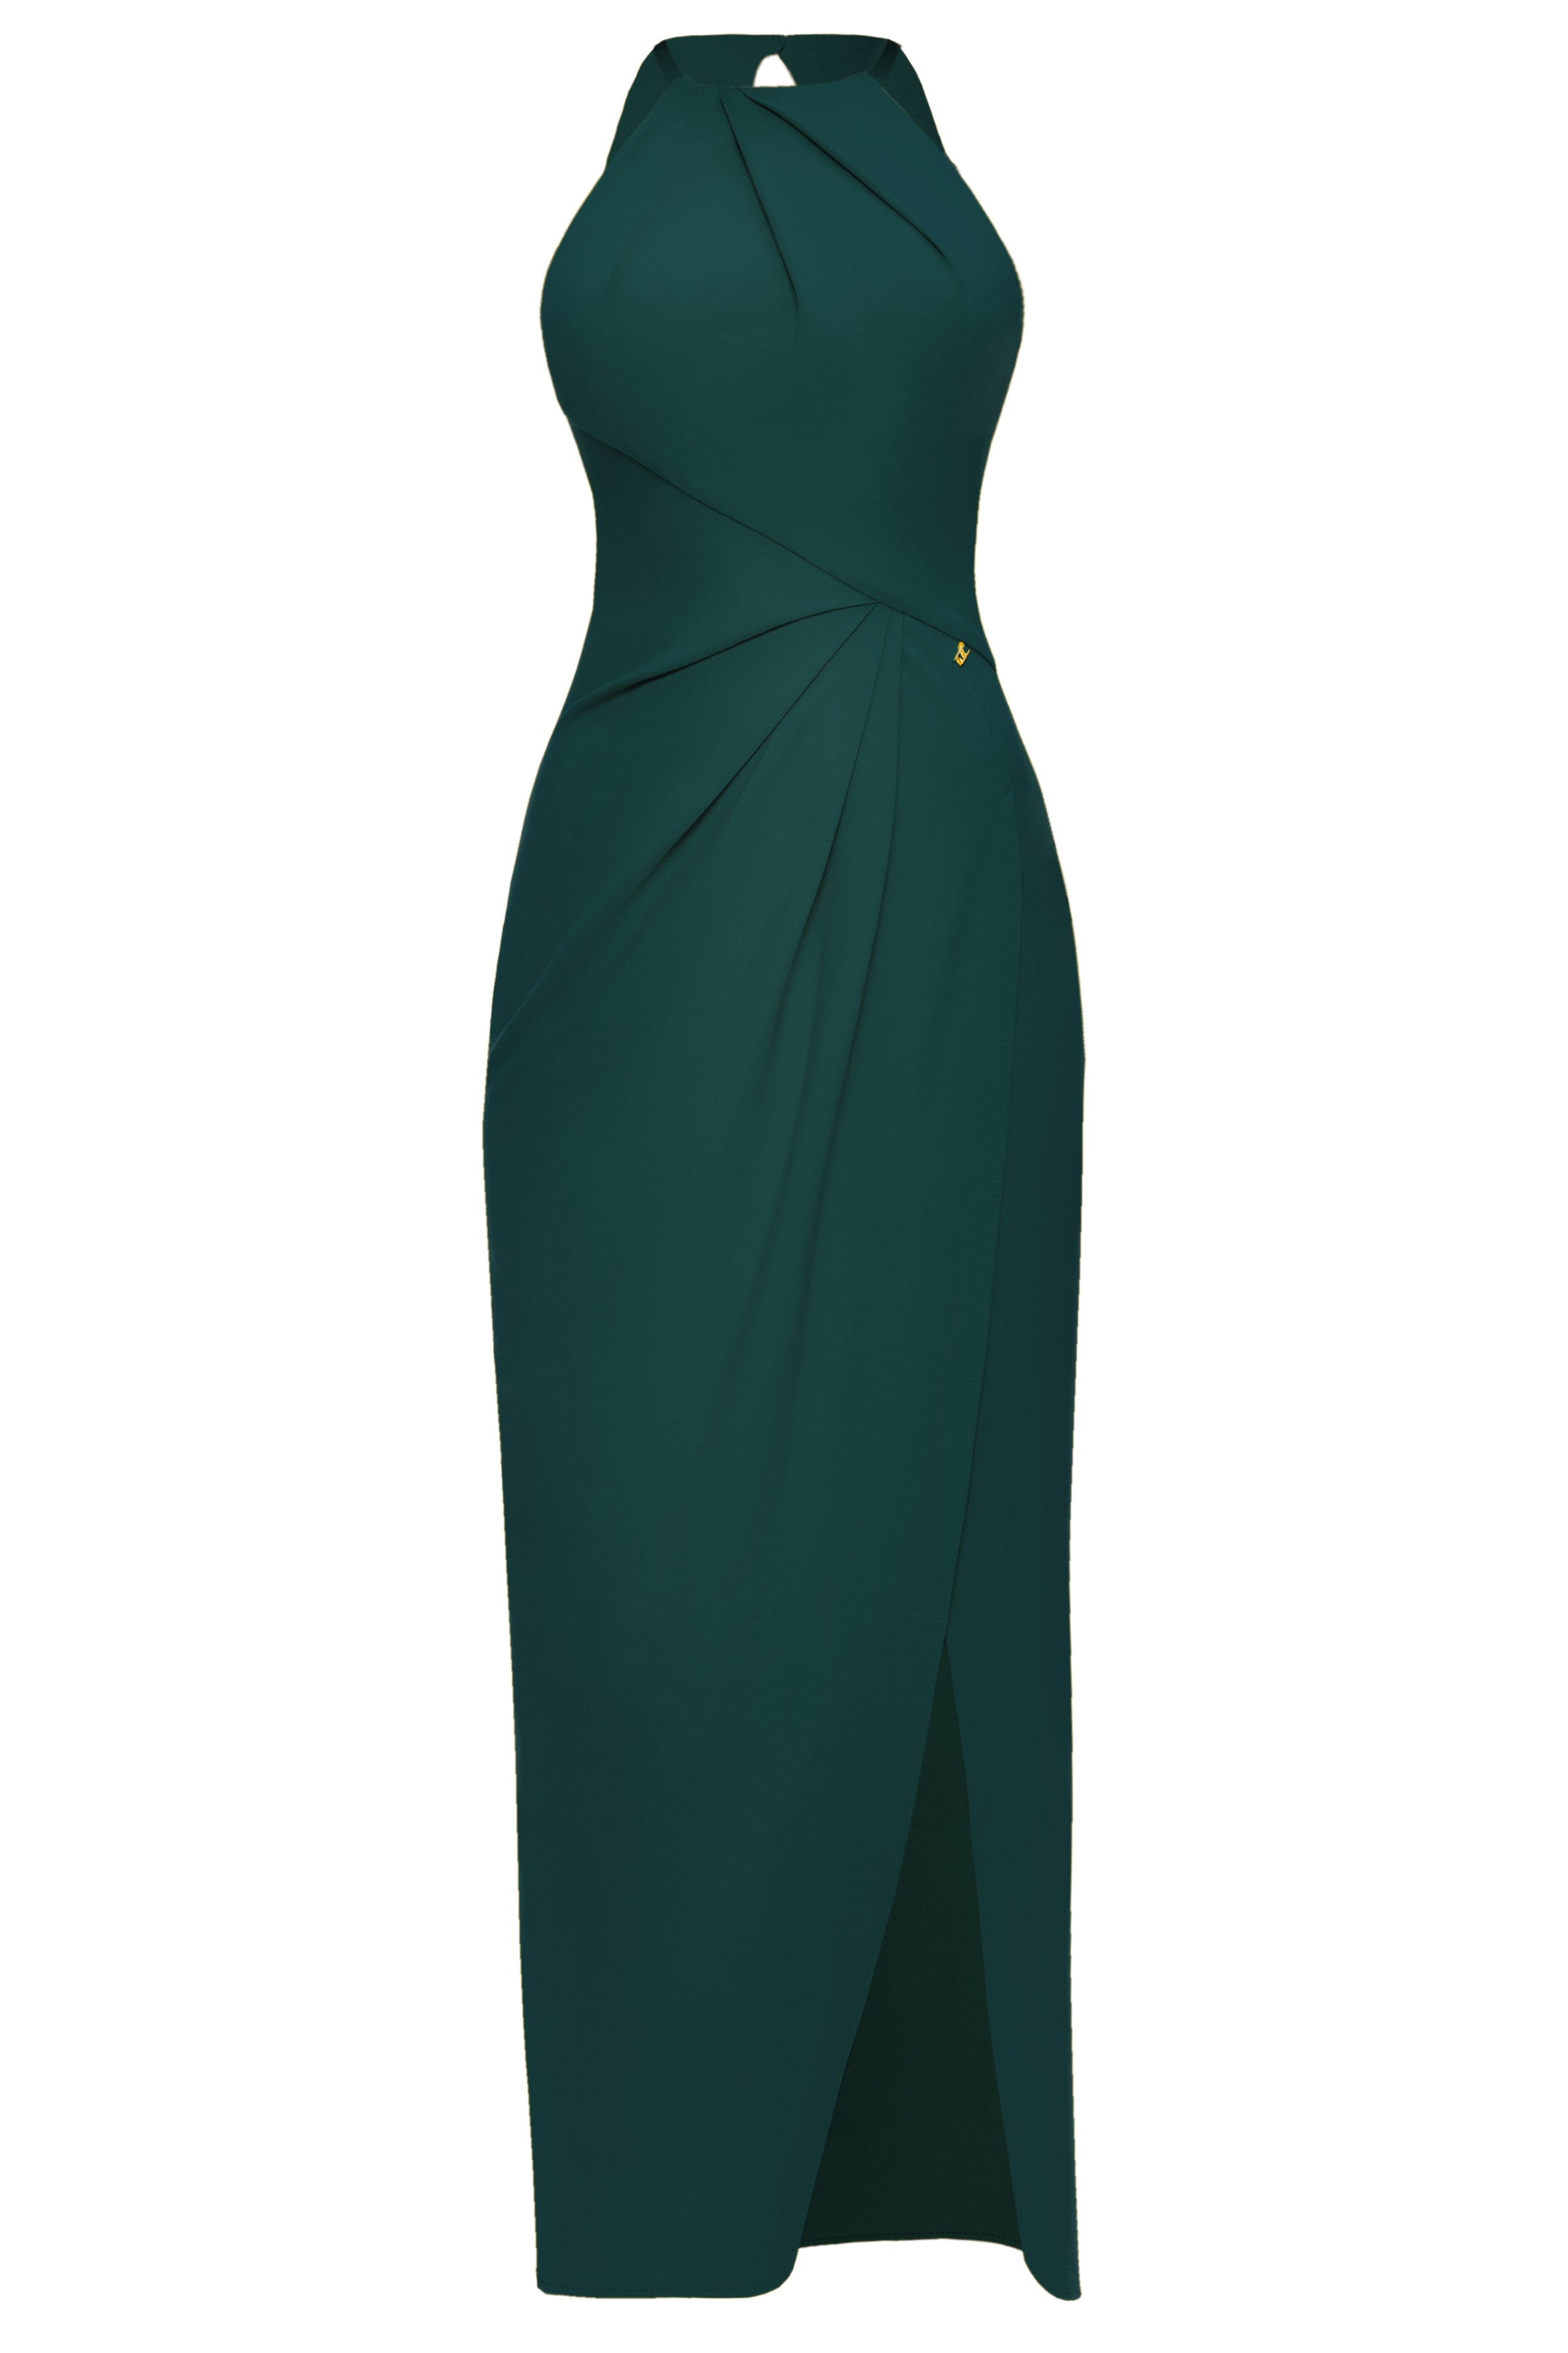 Draped dress Sofia Emerald green